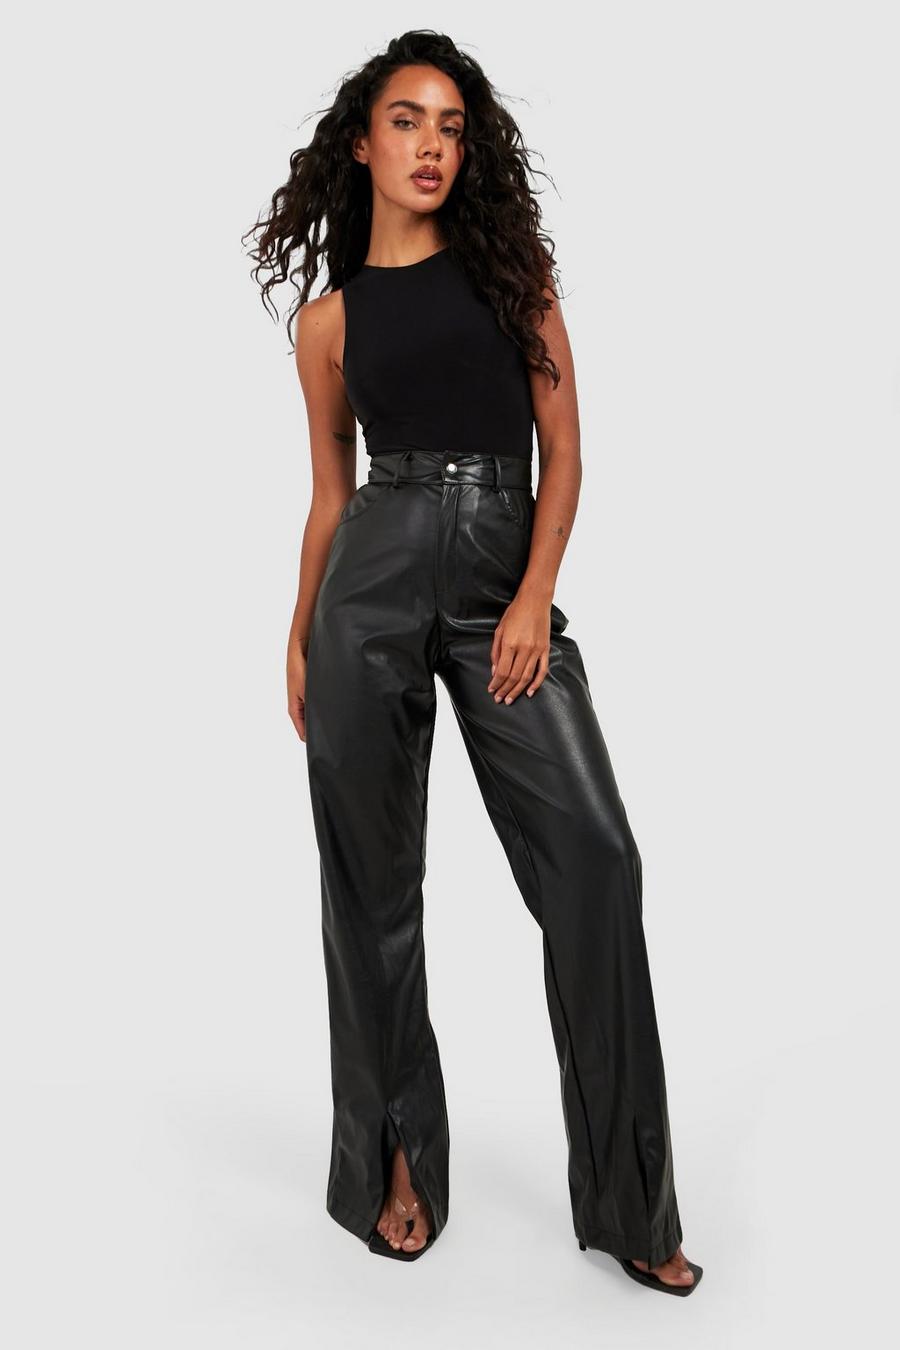 https://media.boohoo.com/i/boohoo/fzz30261_black_xl/female-black-high-waisted-split-hem-leather-look-wide-leg-trousers/?w=900&qlt=default&fmt.jp2.qlt=70&fmt=auto&sm=fit